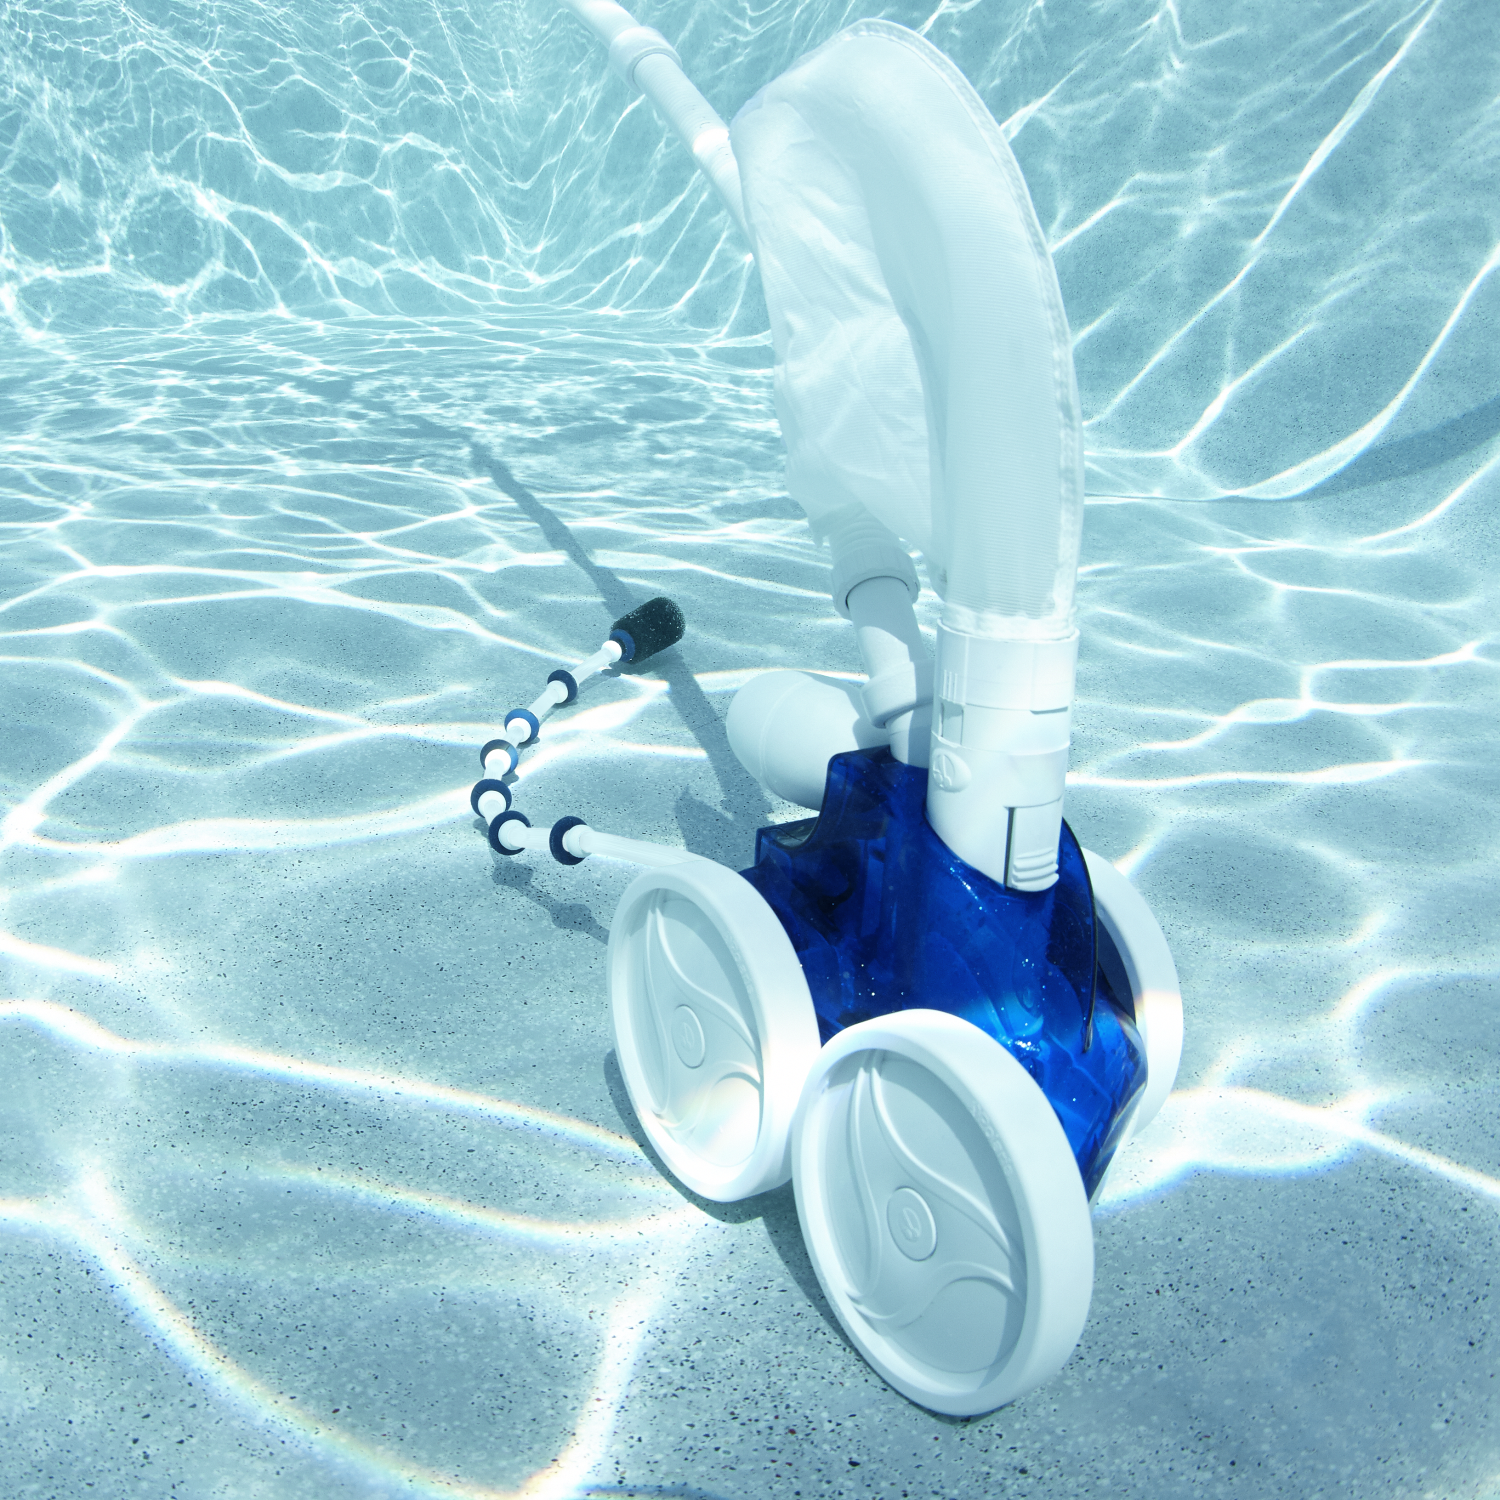 polaris-360-pressure-pool-cleaner-1-swimming-pool-cleaner-worldwide